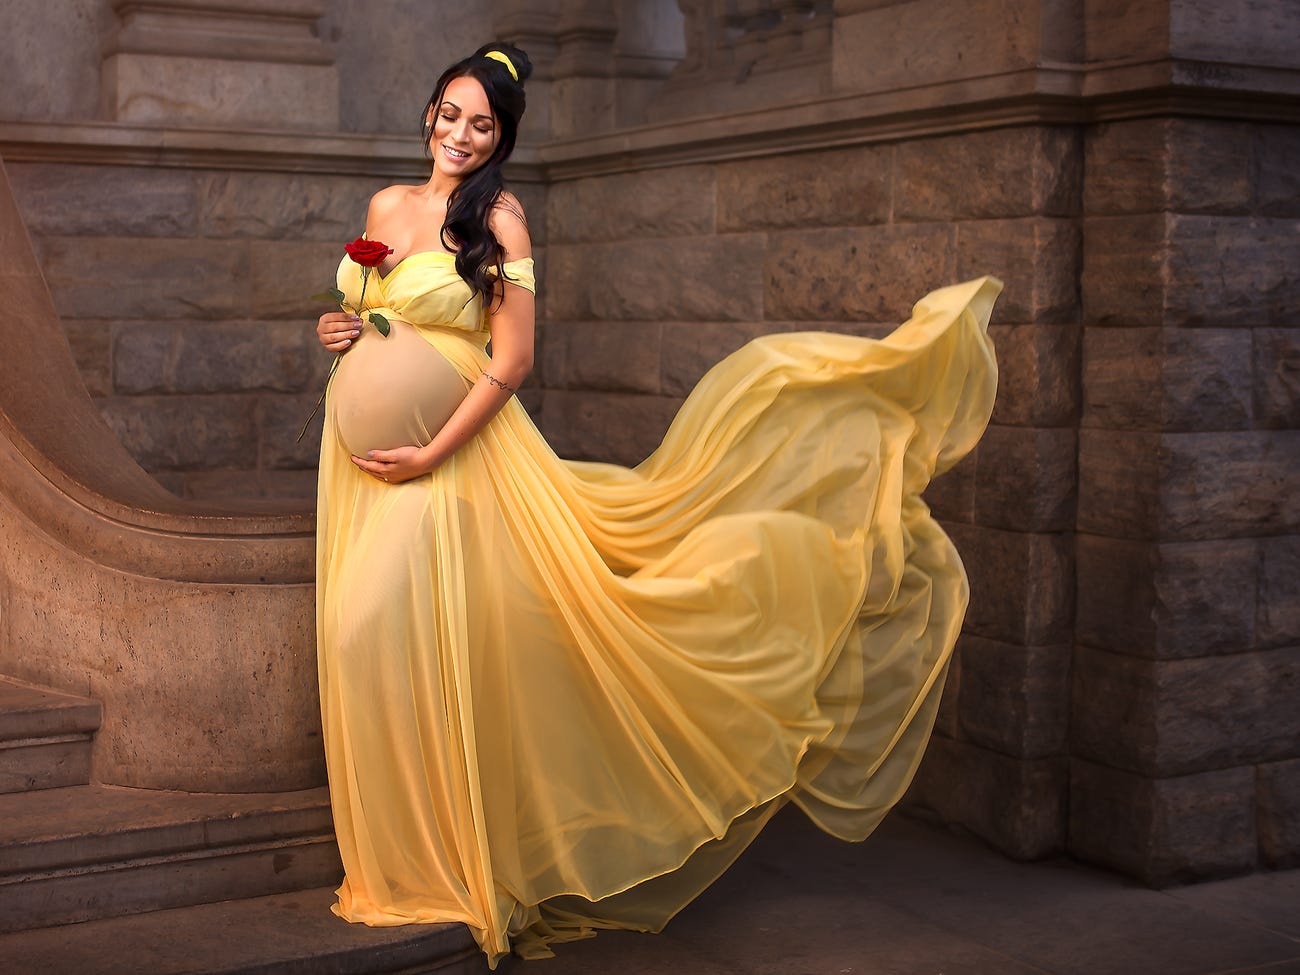 A Photographer Transforms Pregnant Women Into Disney Princesses For Magical Maternity Photo